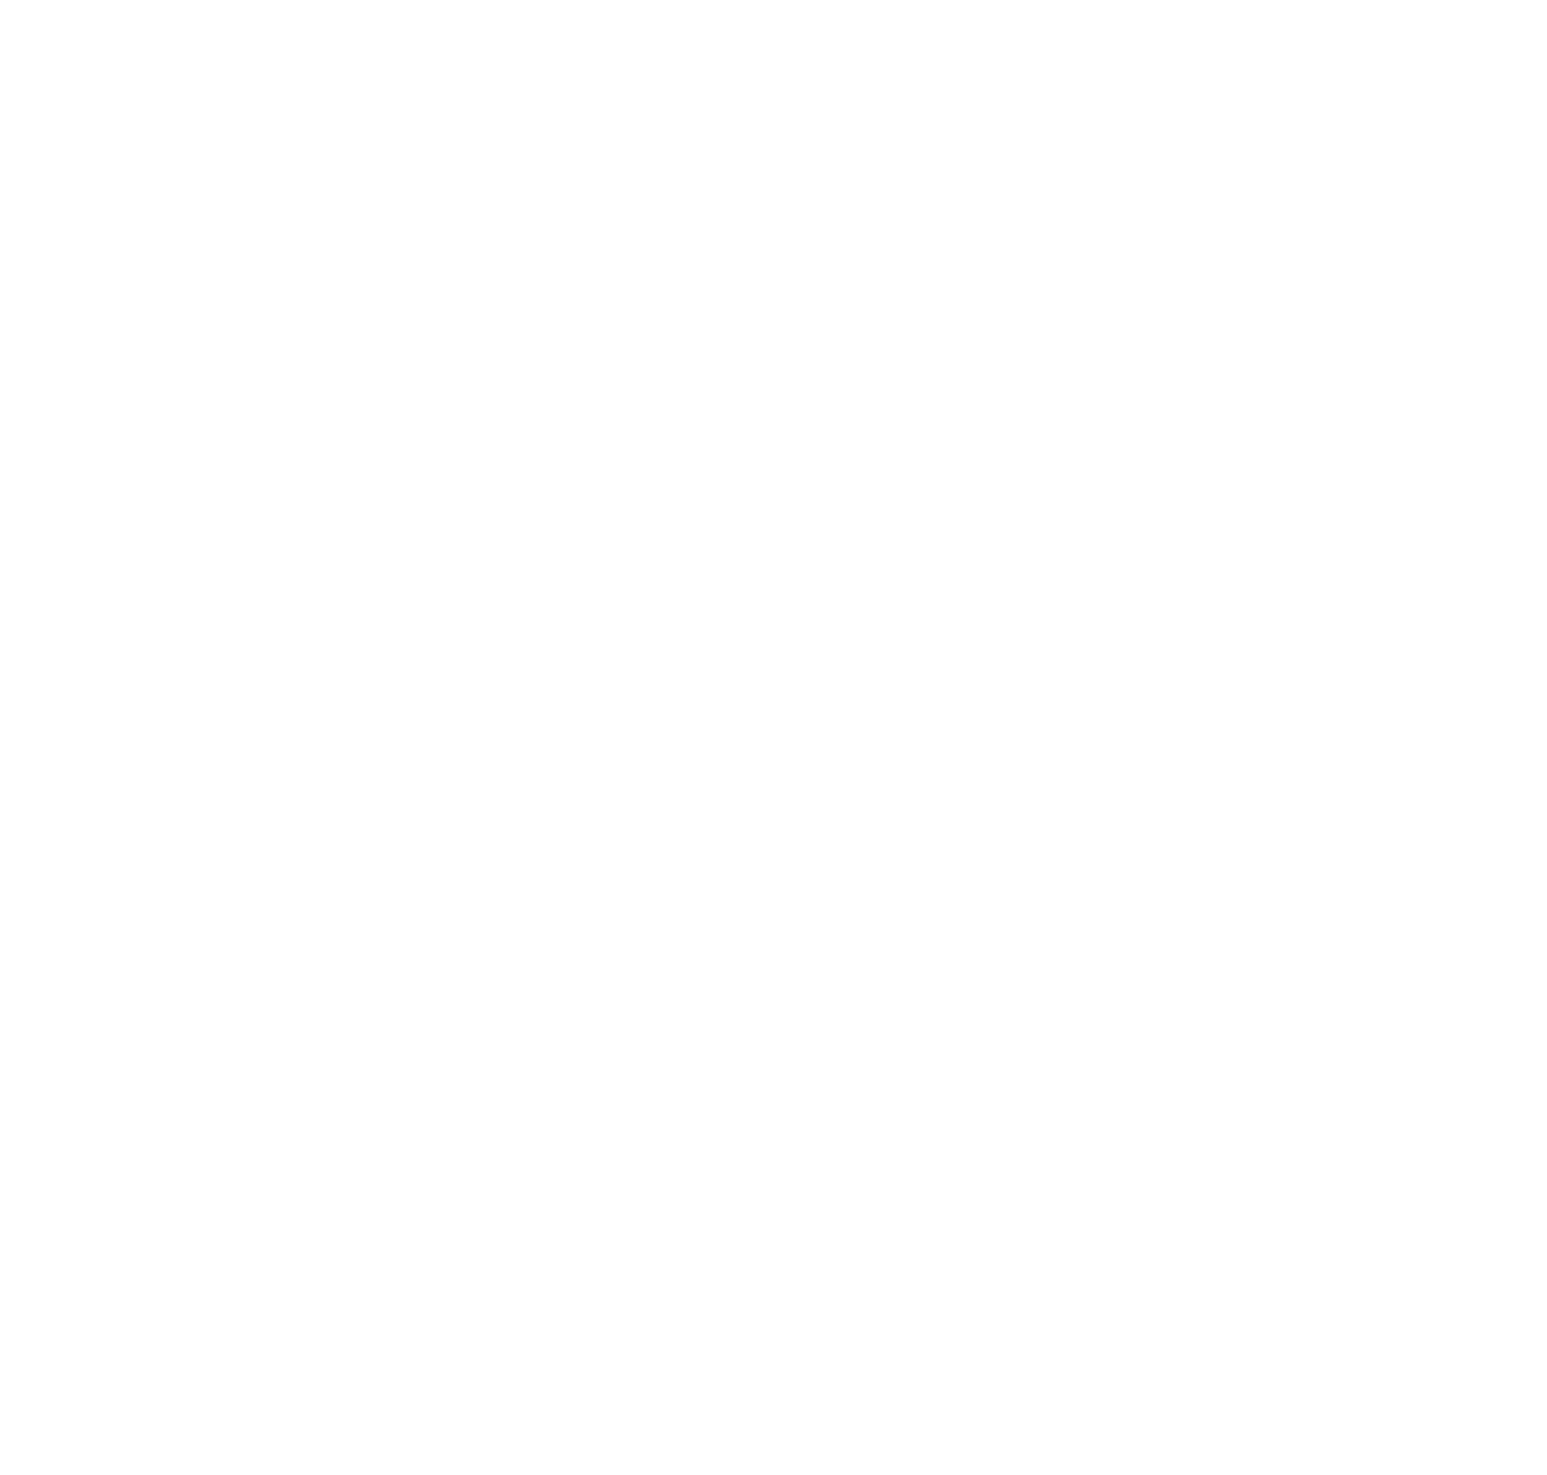 Sabra Health Care REIT logo for dark backgrounds (transparent PNG)